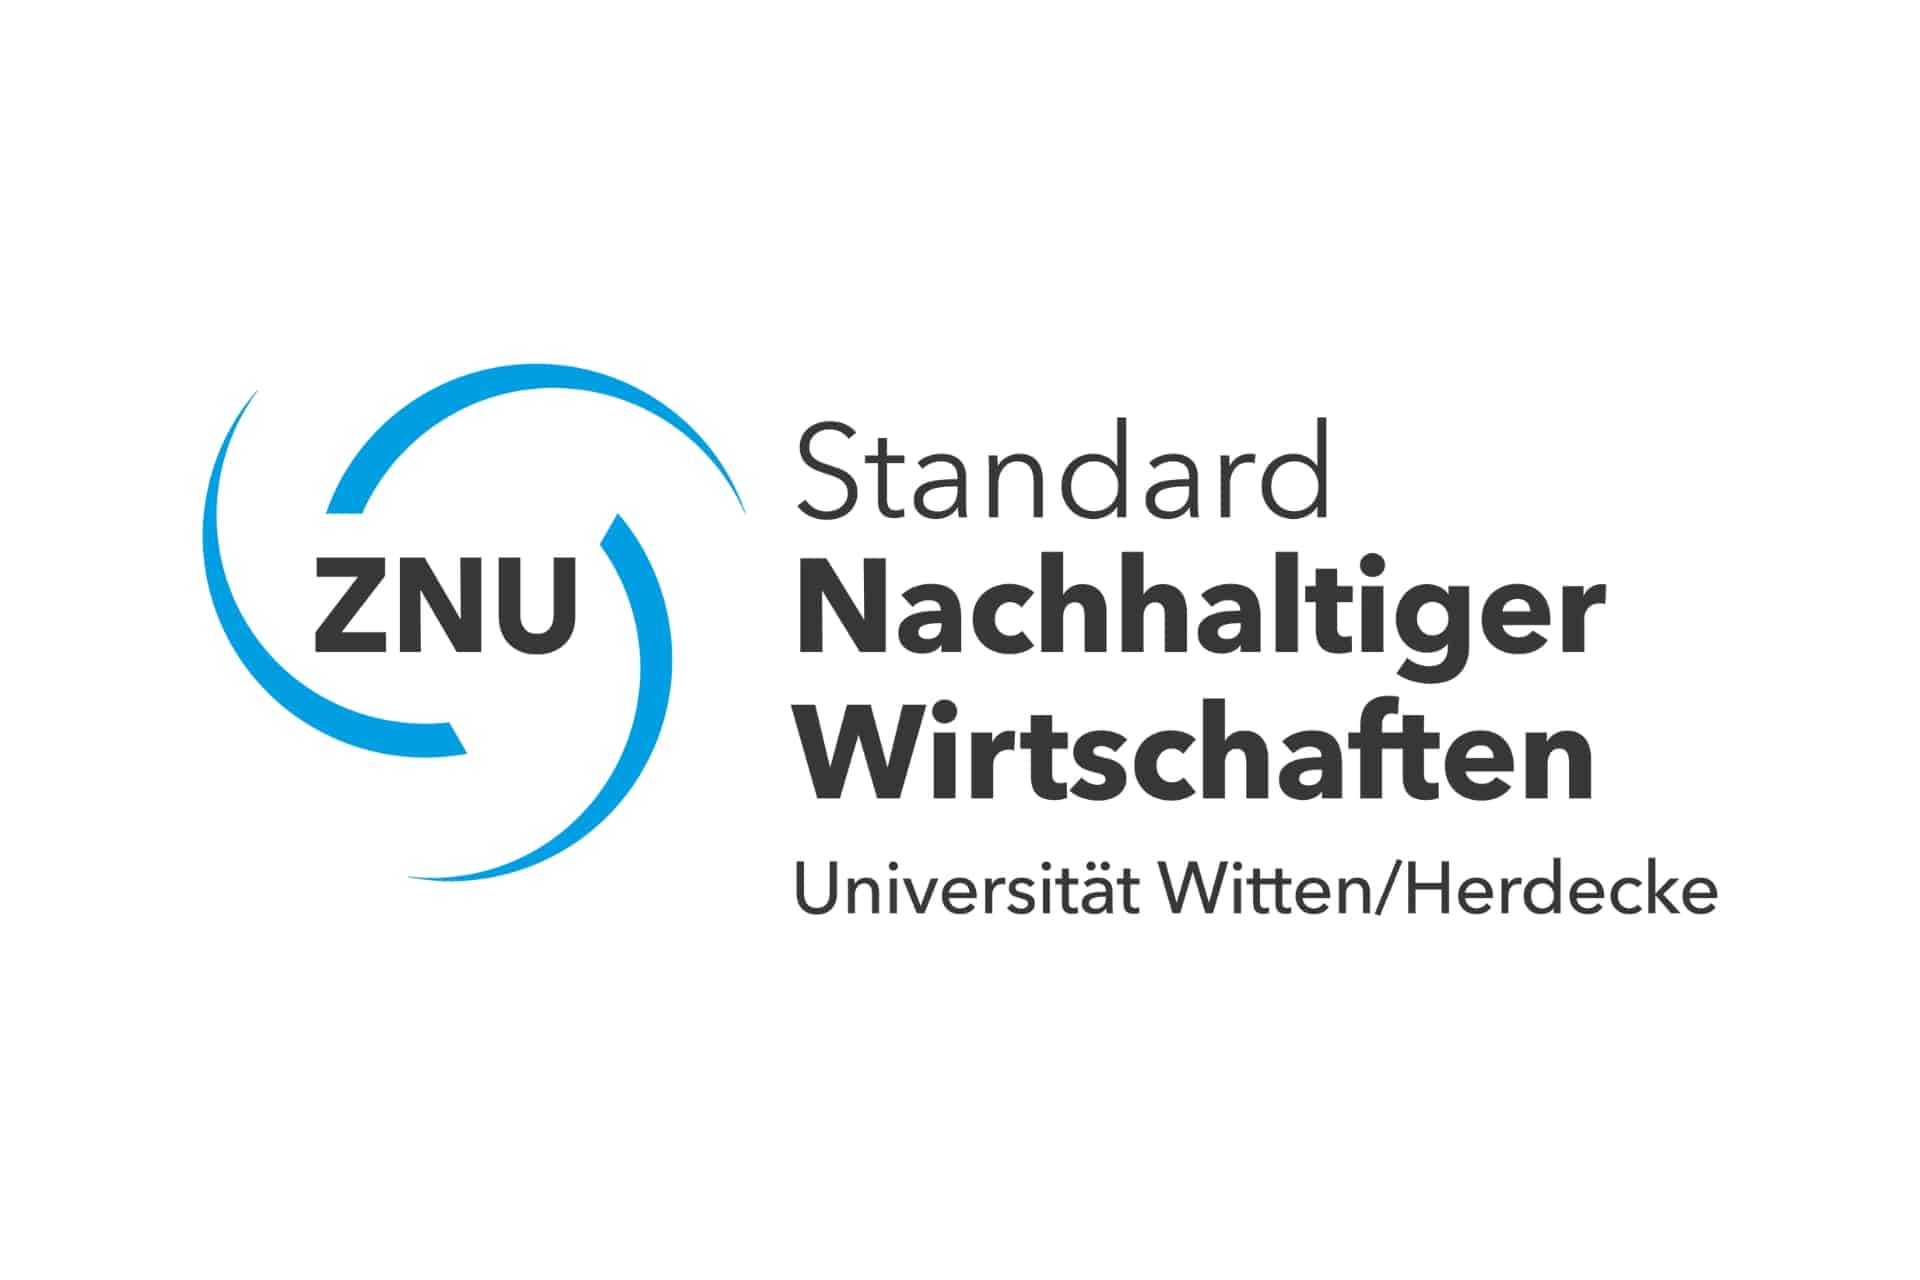 ZNU Standard